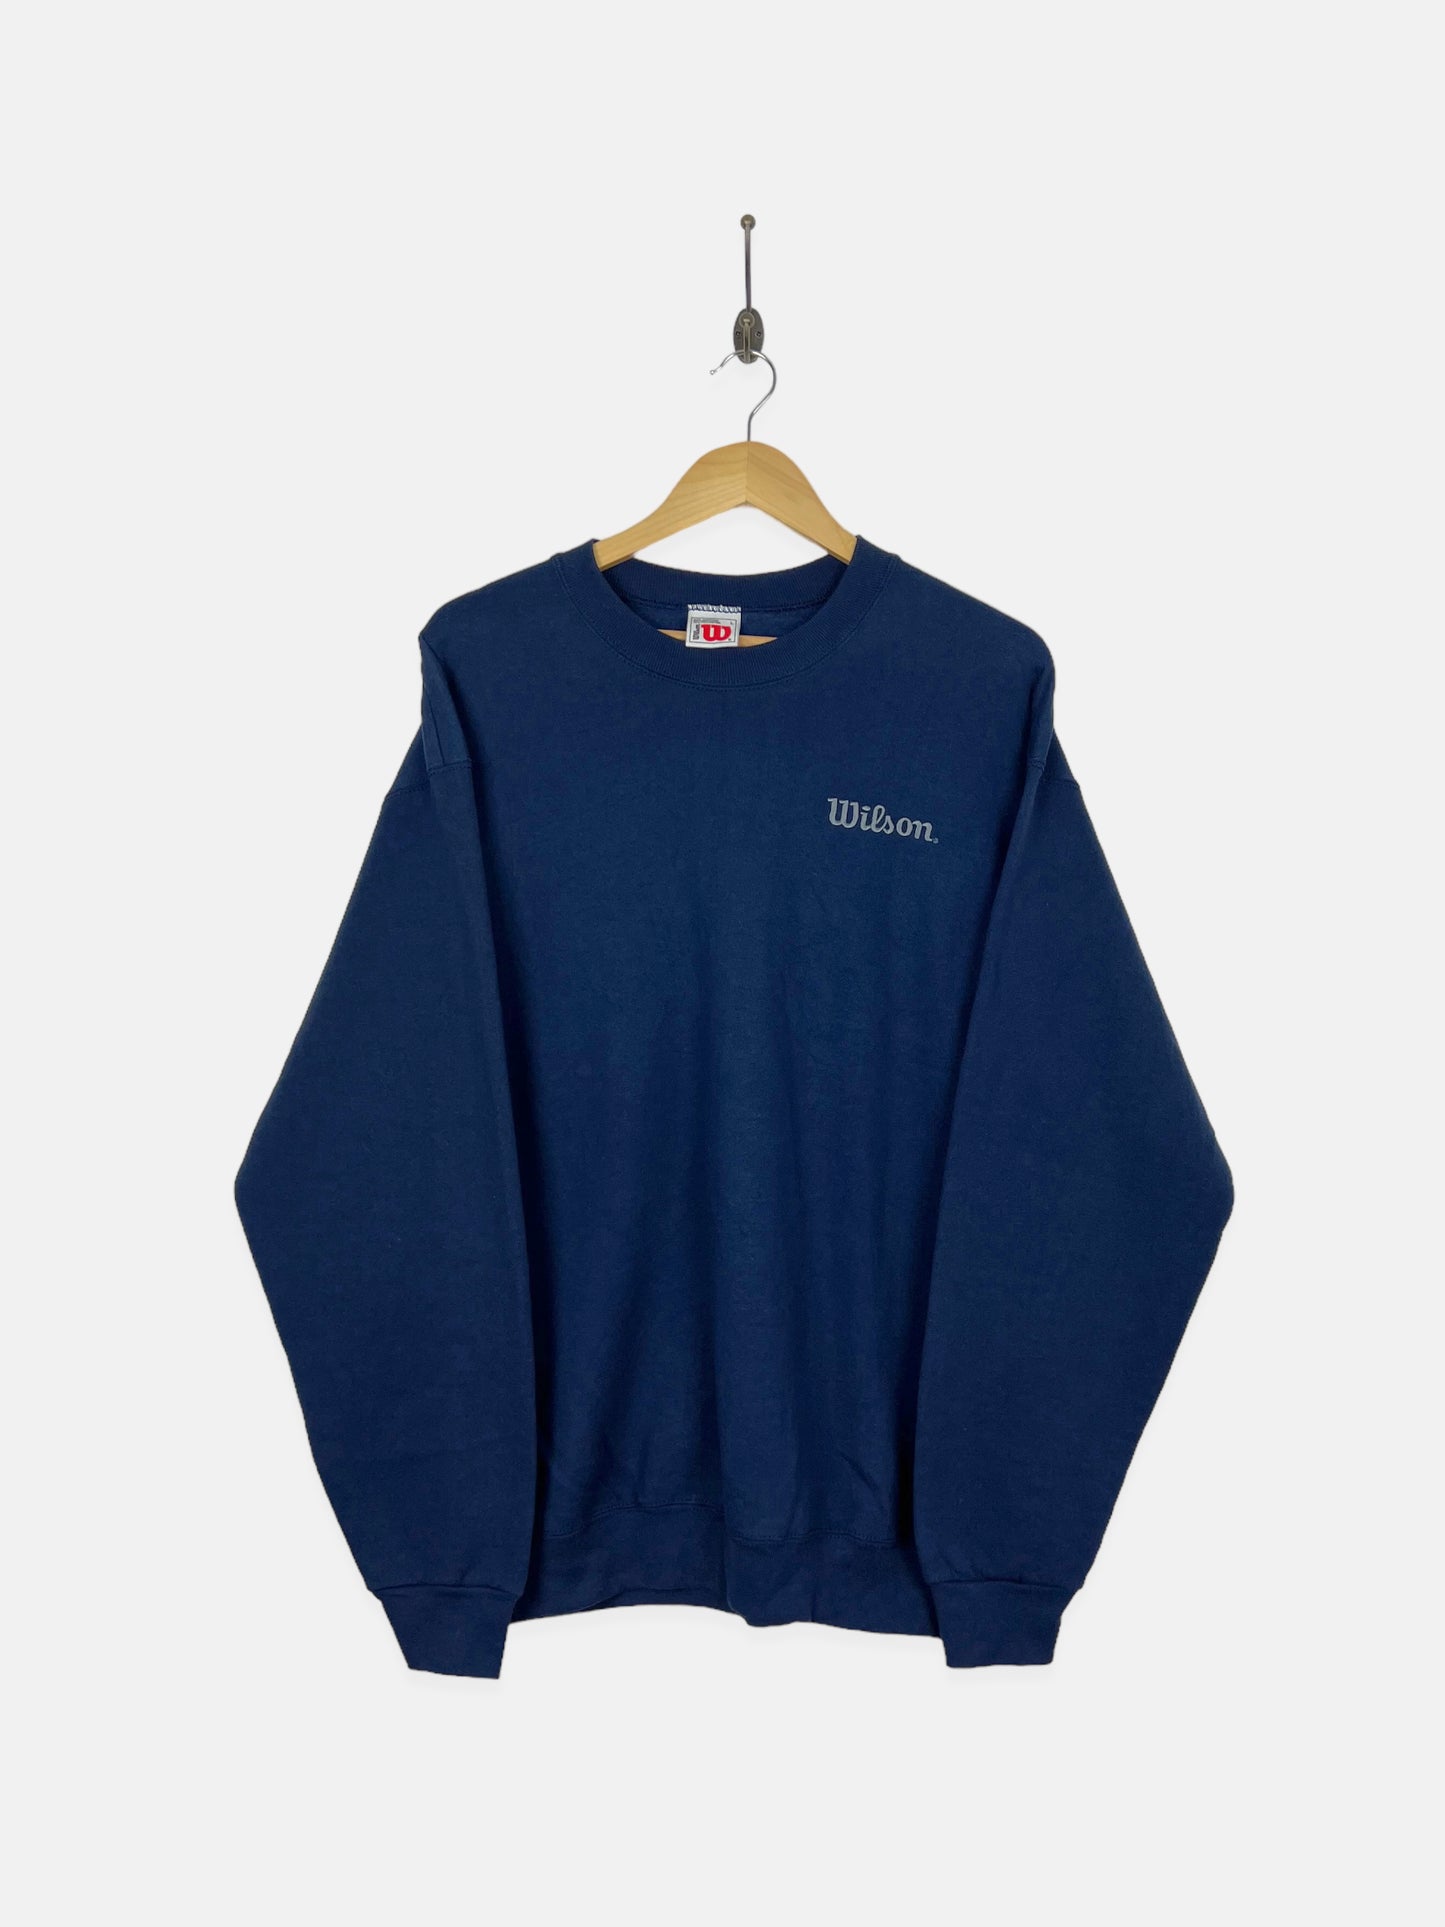 90's Wilson USA Made Embroidered Vintage Sweatshirt Size L